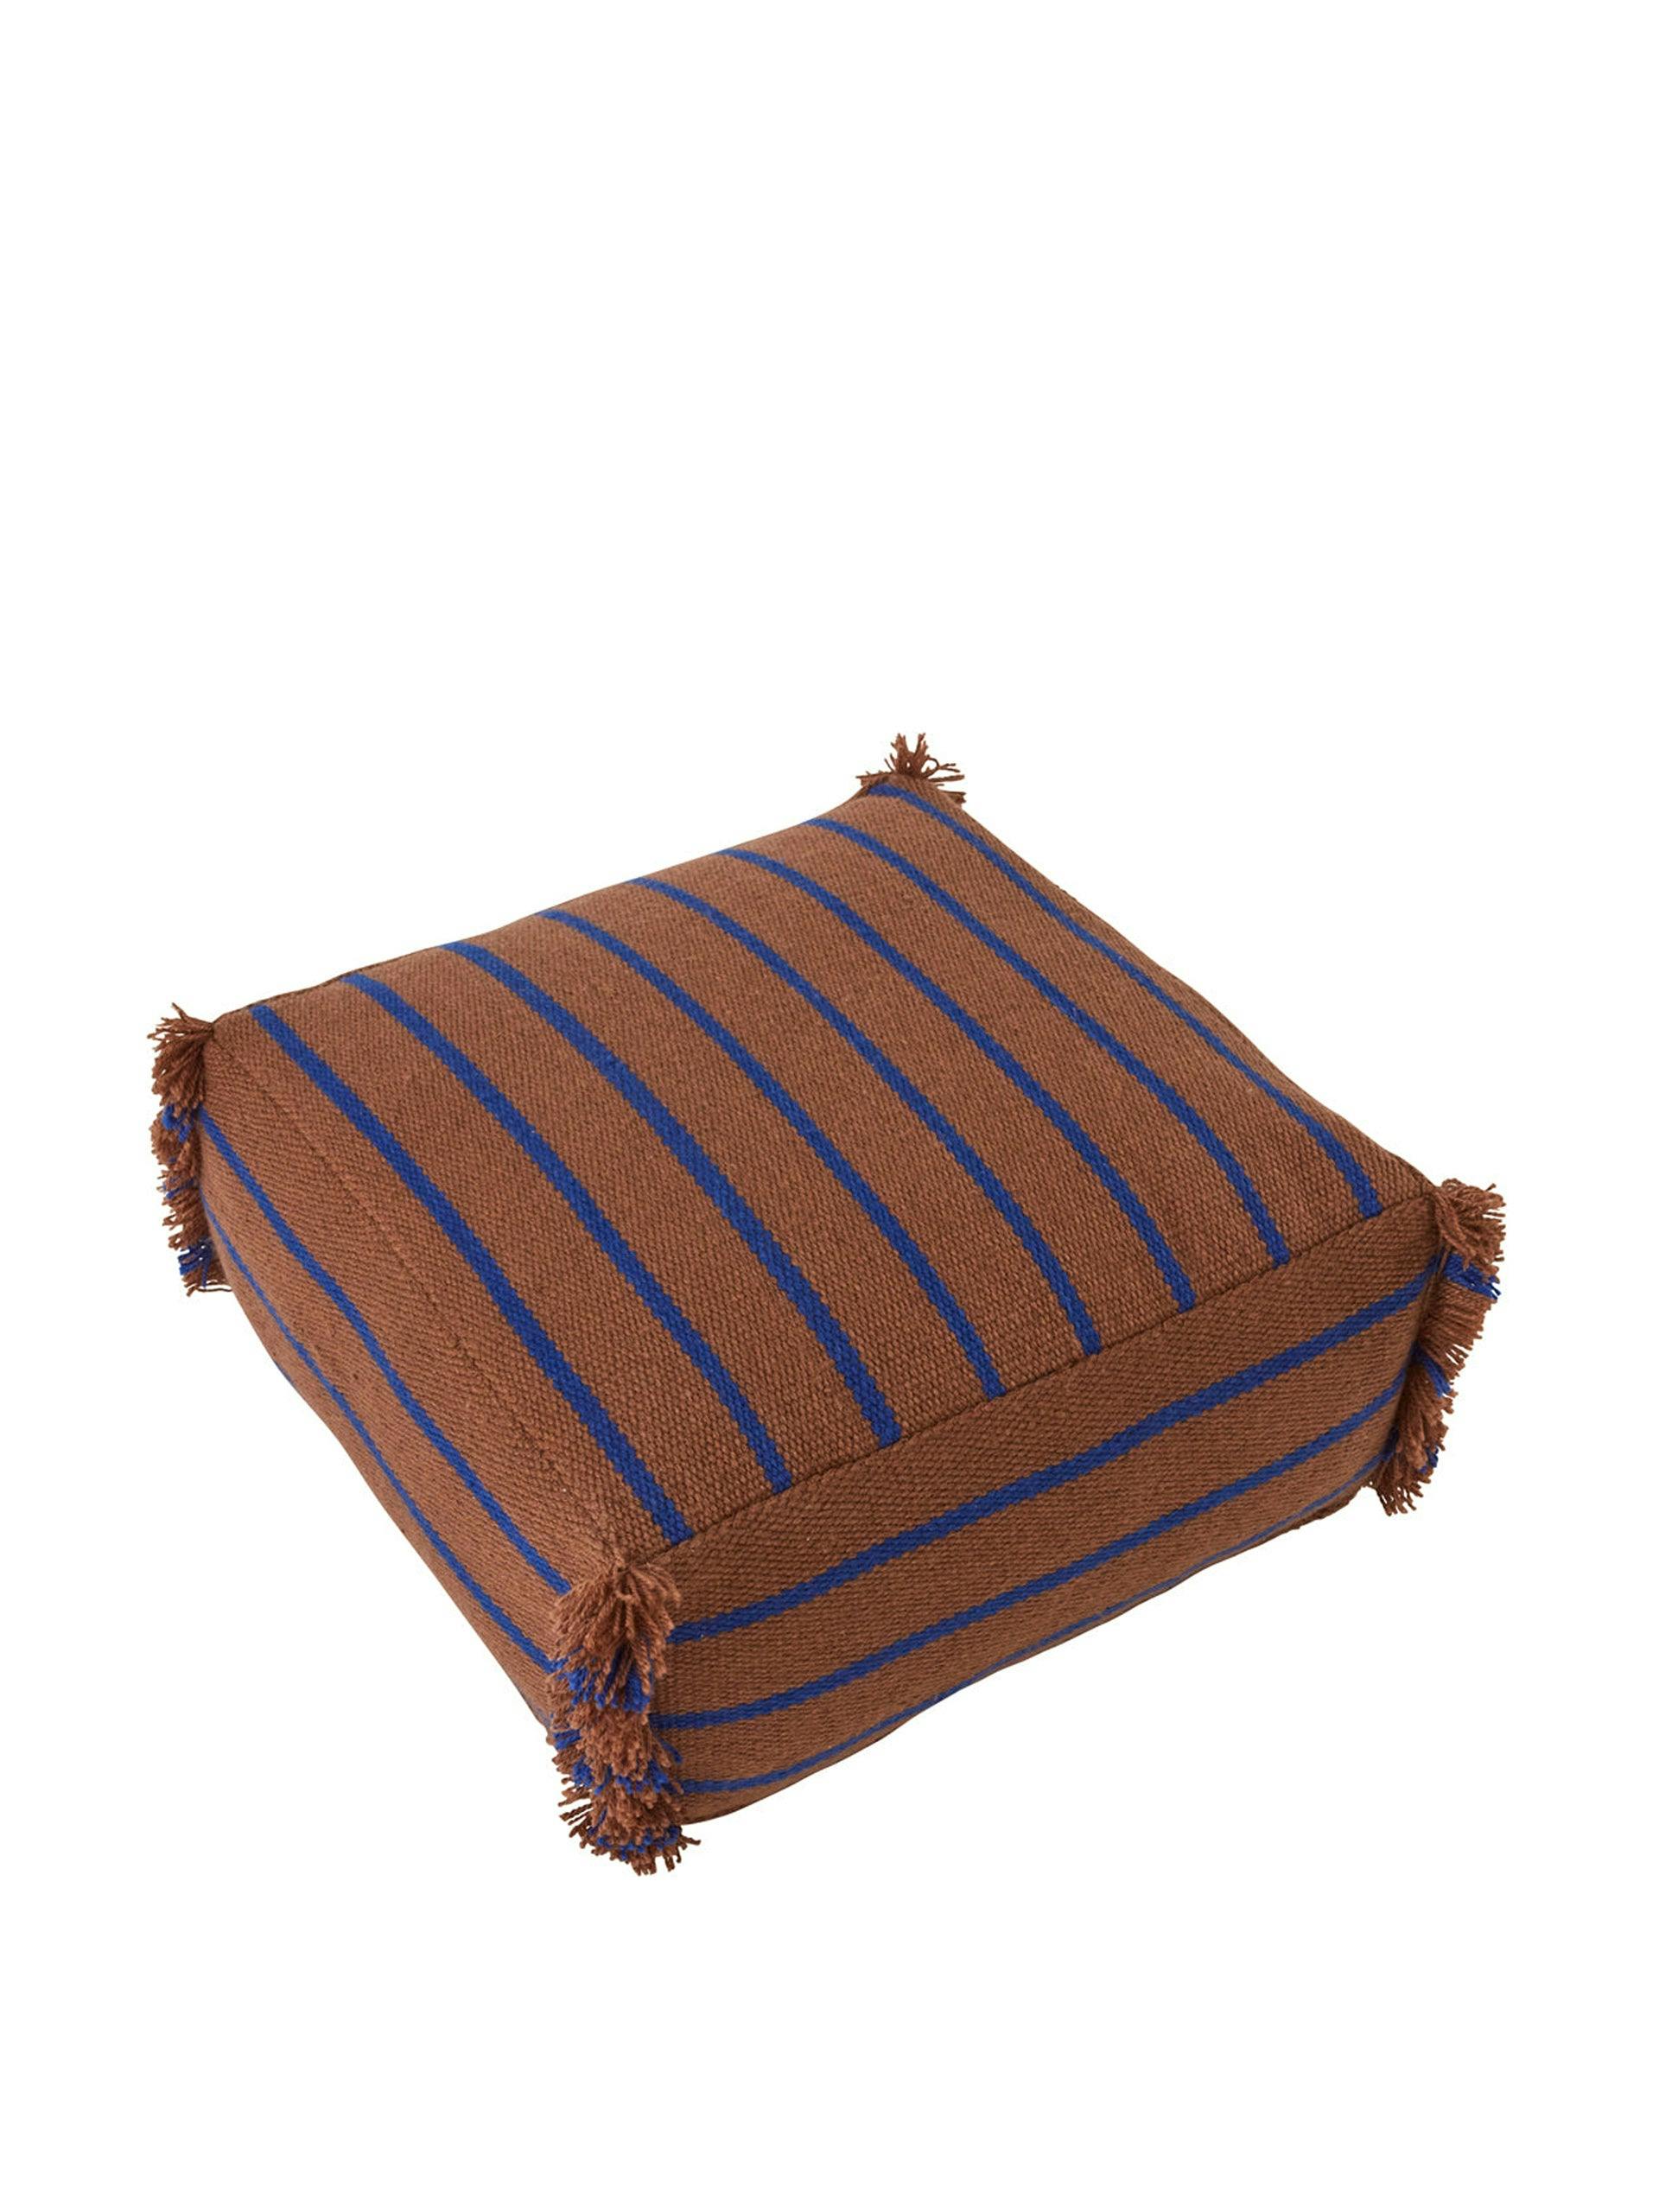 Brown and blue stripe pouf